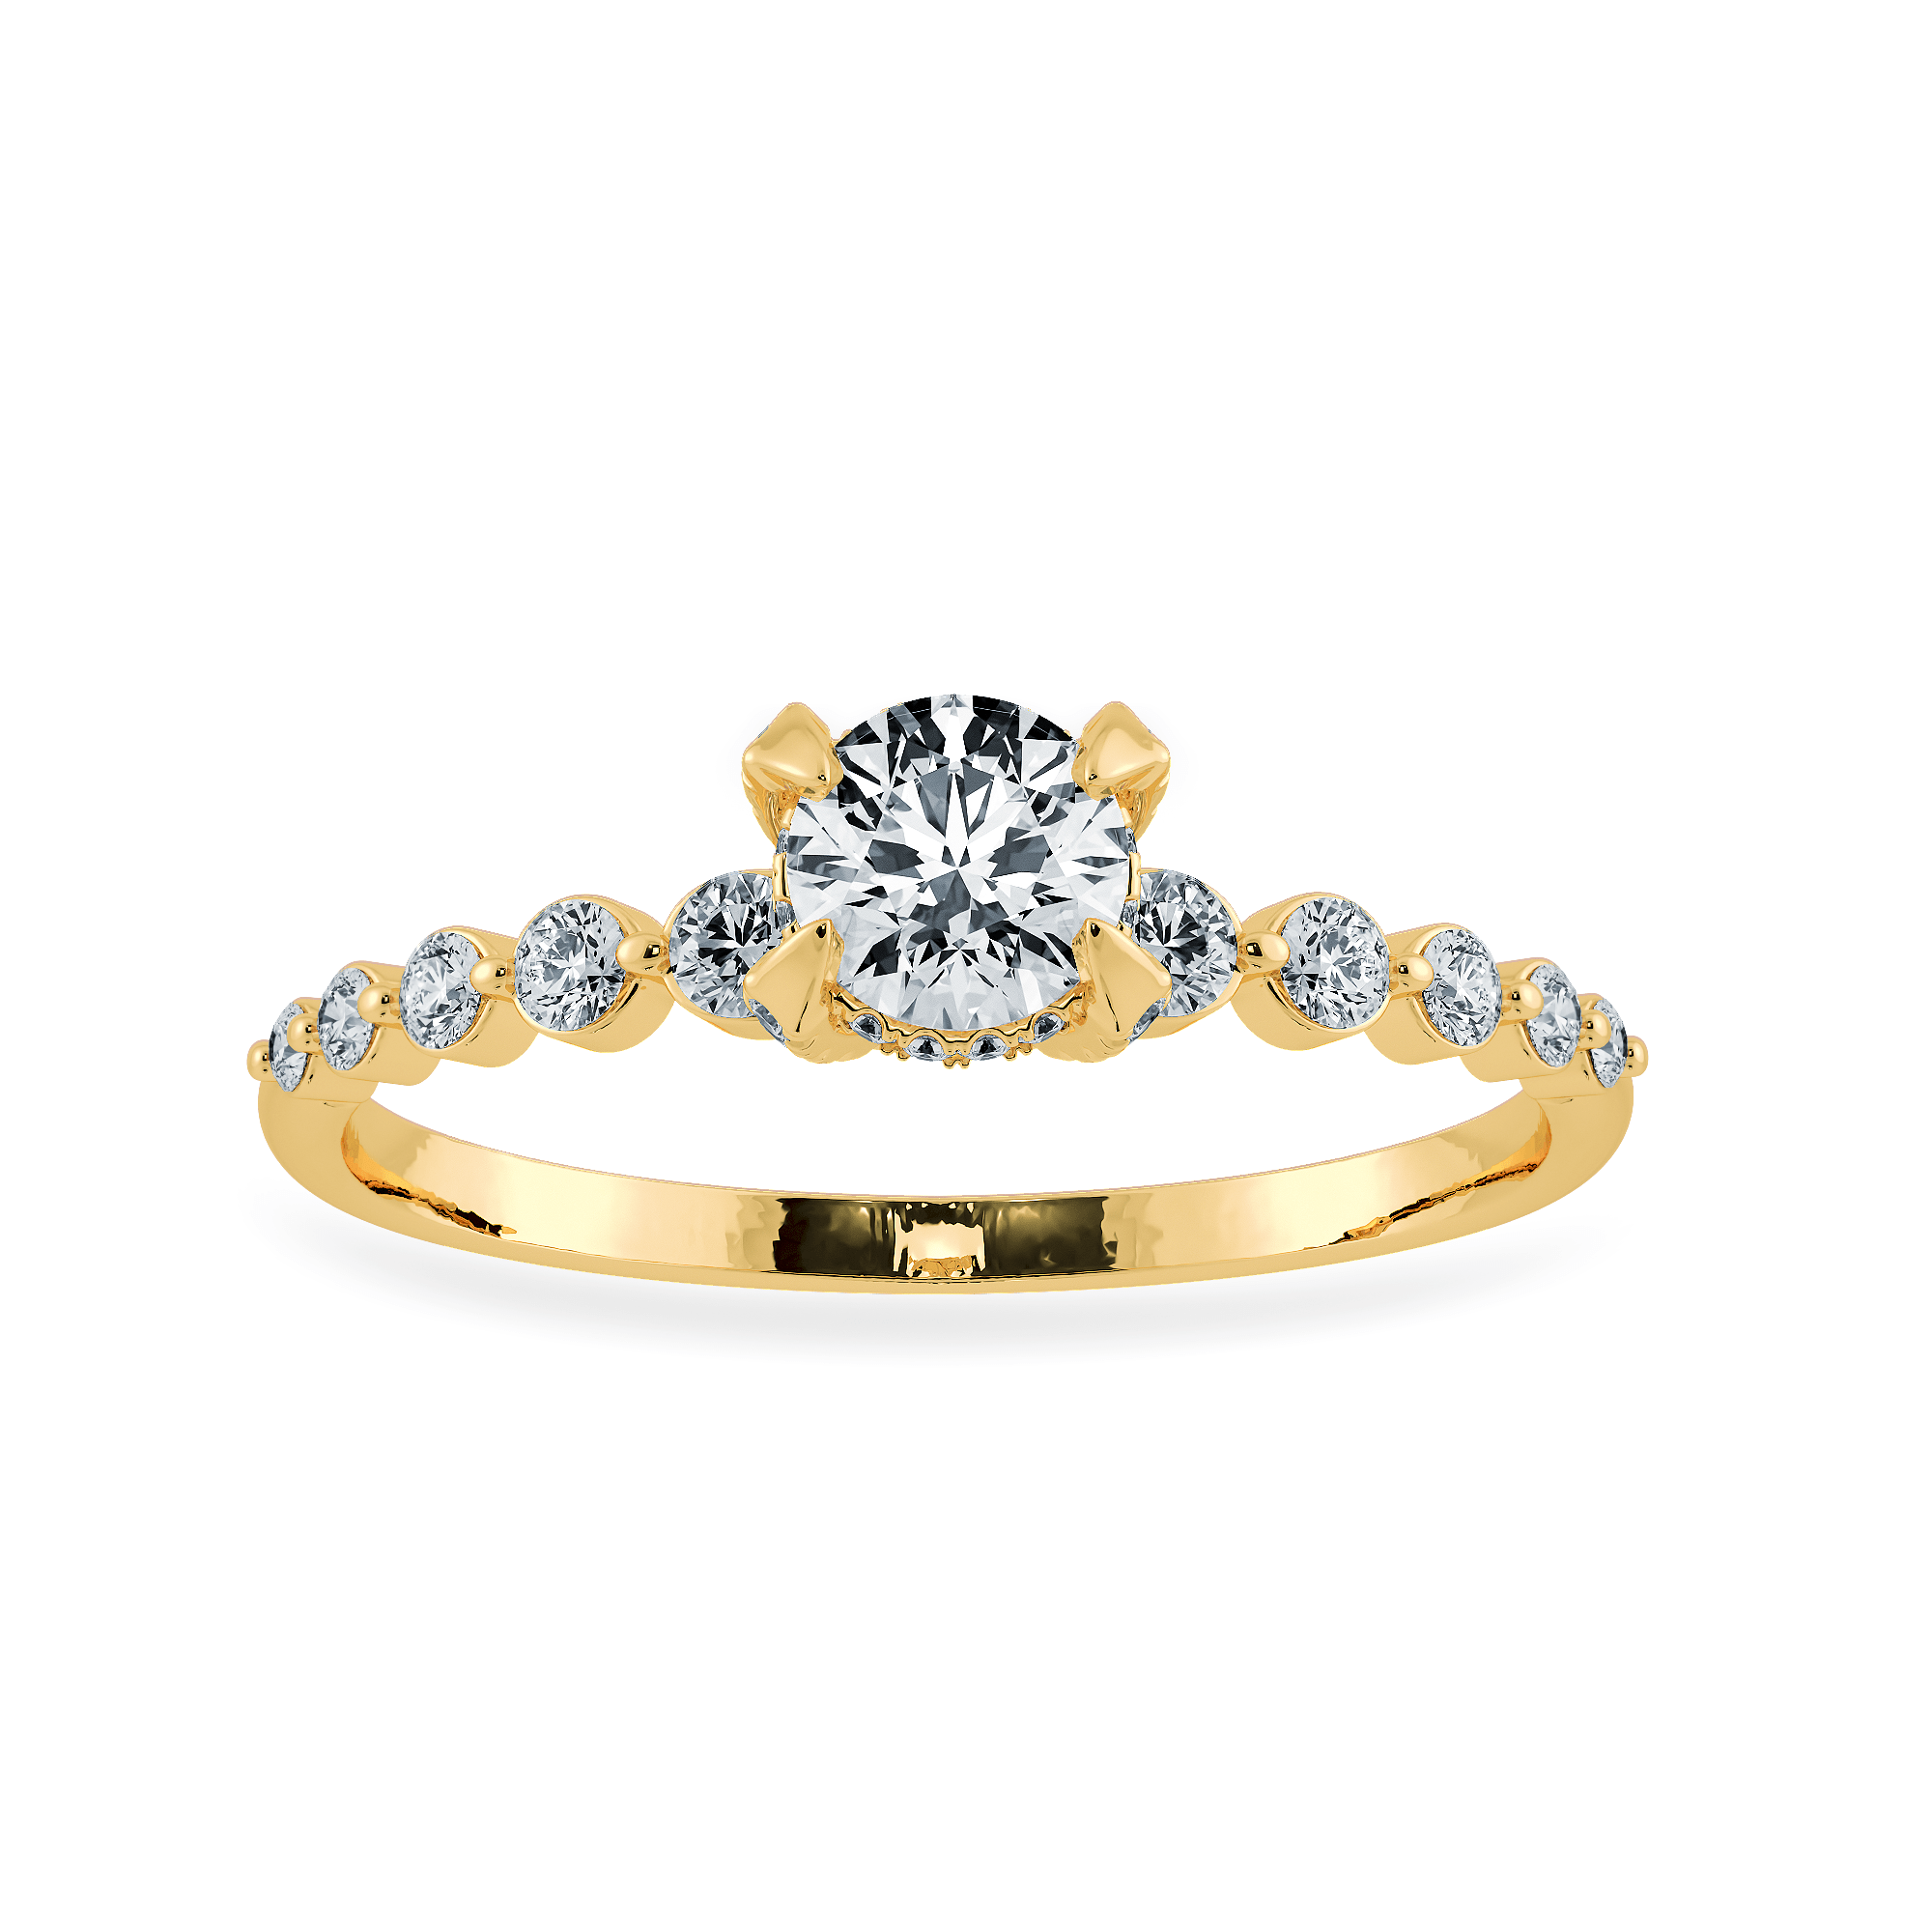 Diamond Engagement Ring, Rose Gold Engagement Ring, Unique Engagement Ring,  Promise Ring, Rings for Women Simple Engagement Ring - Etsy